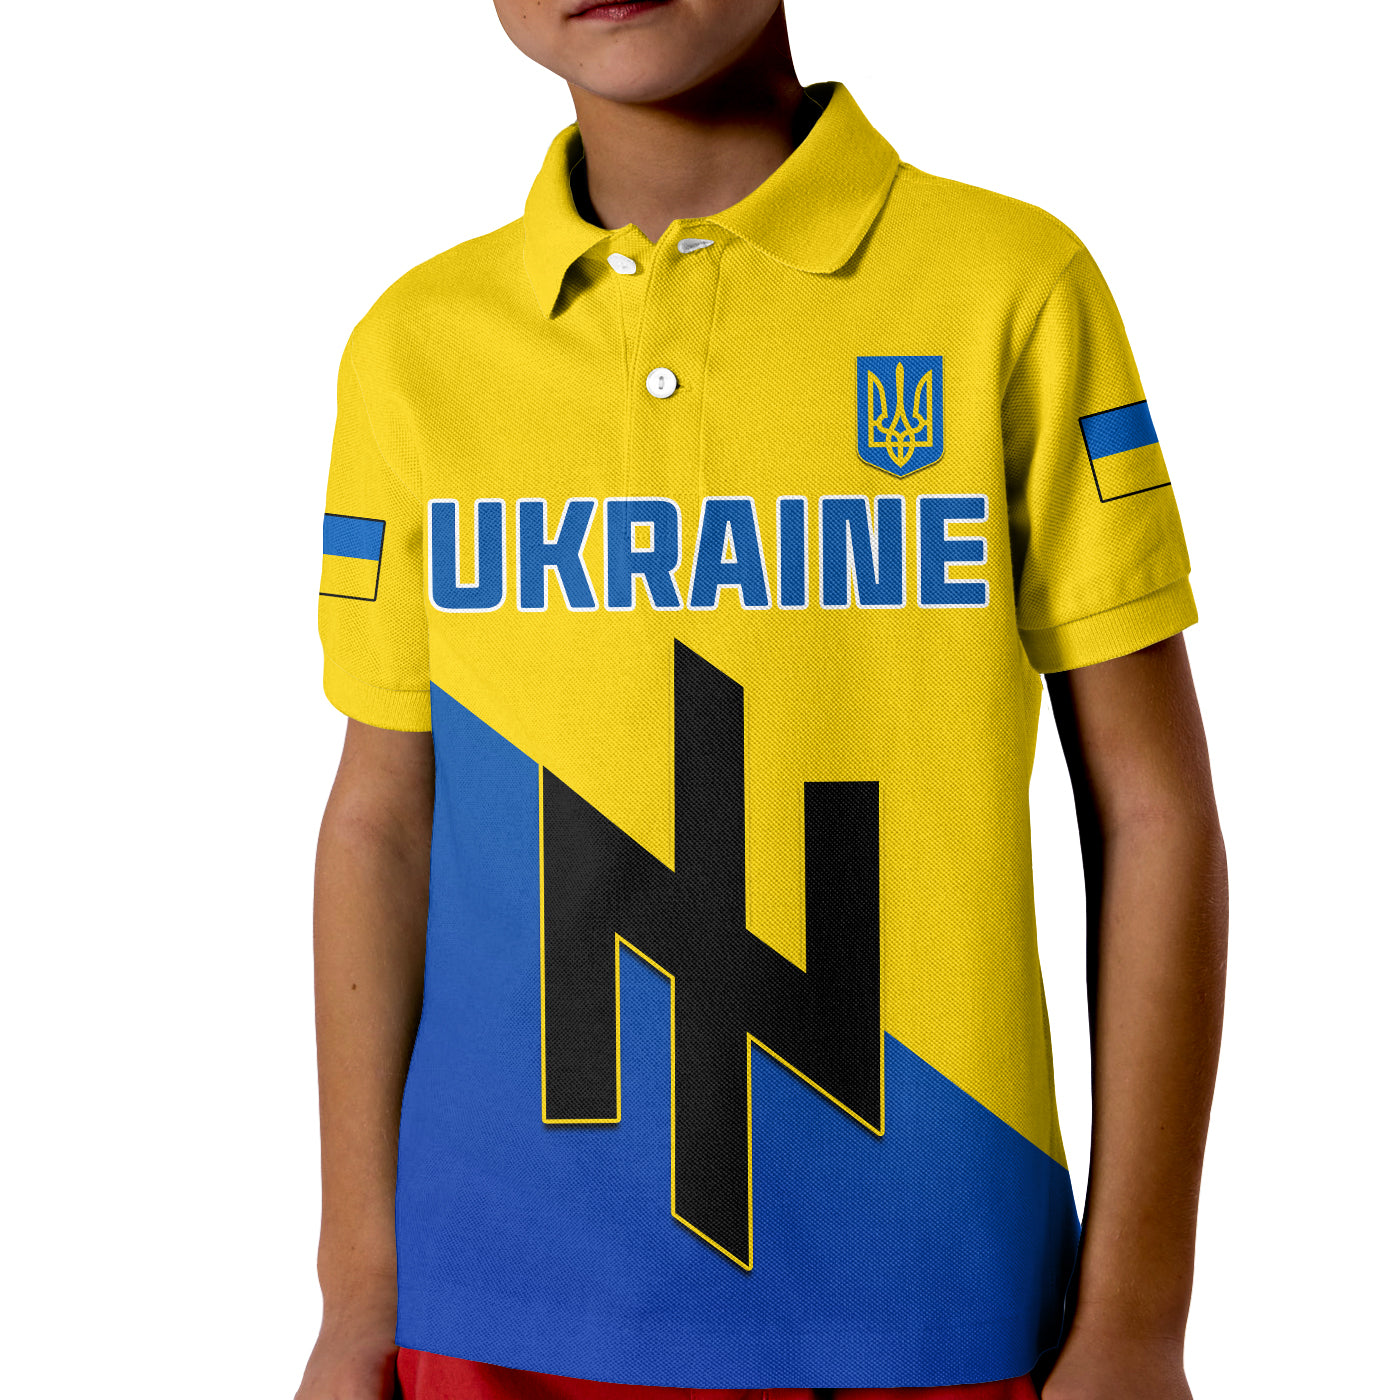 ukraine-polo-shirt-kid-style-flag-come-on